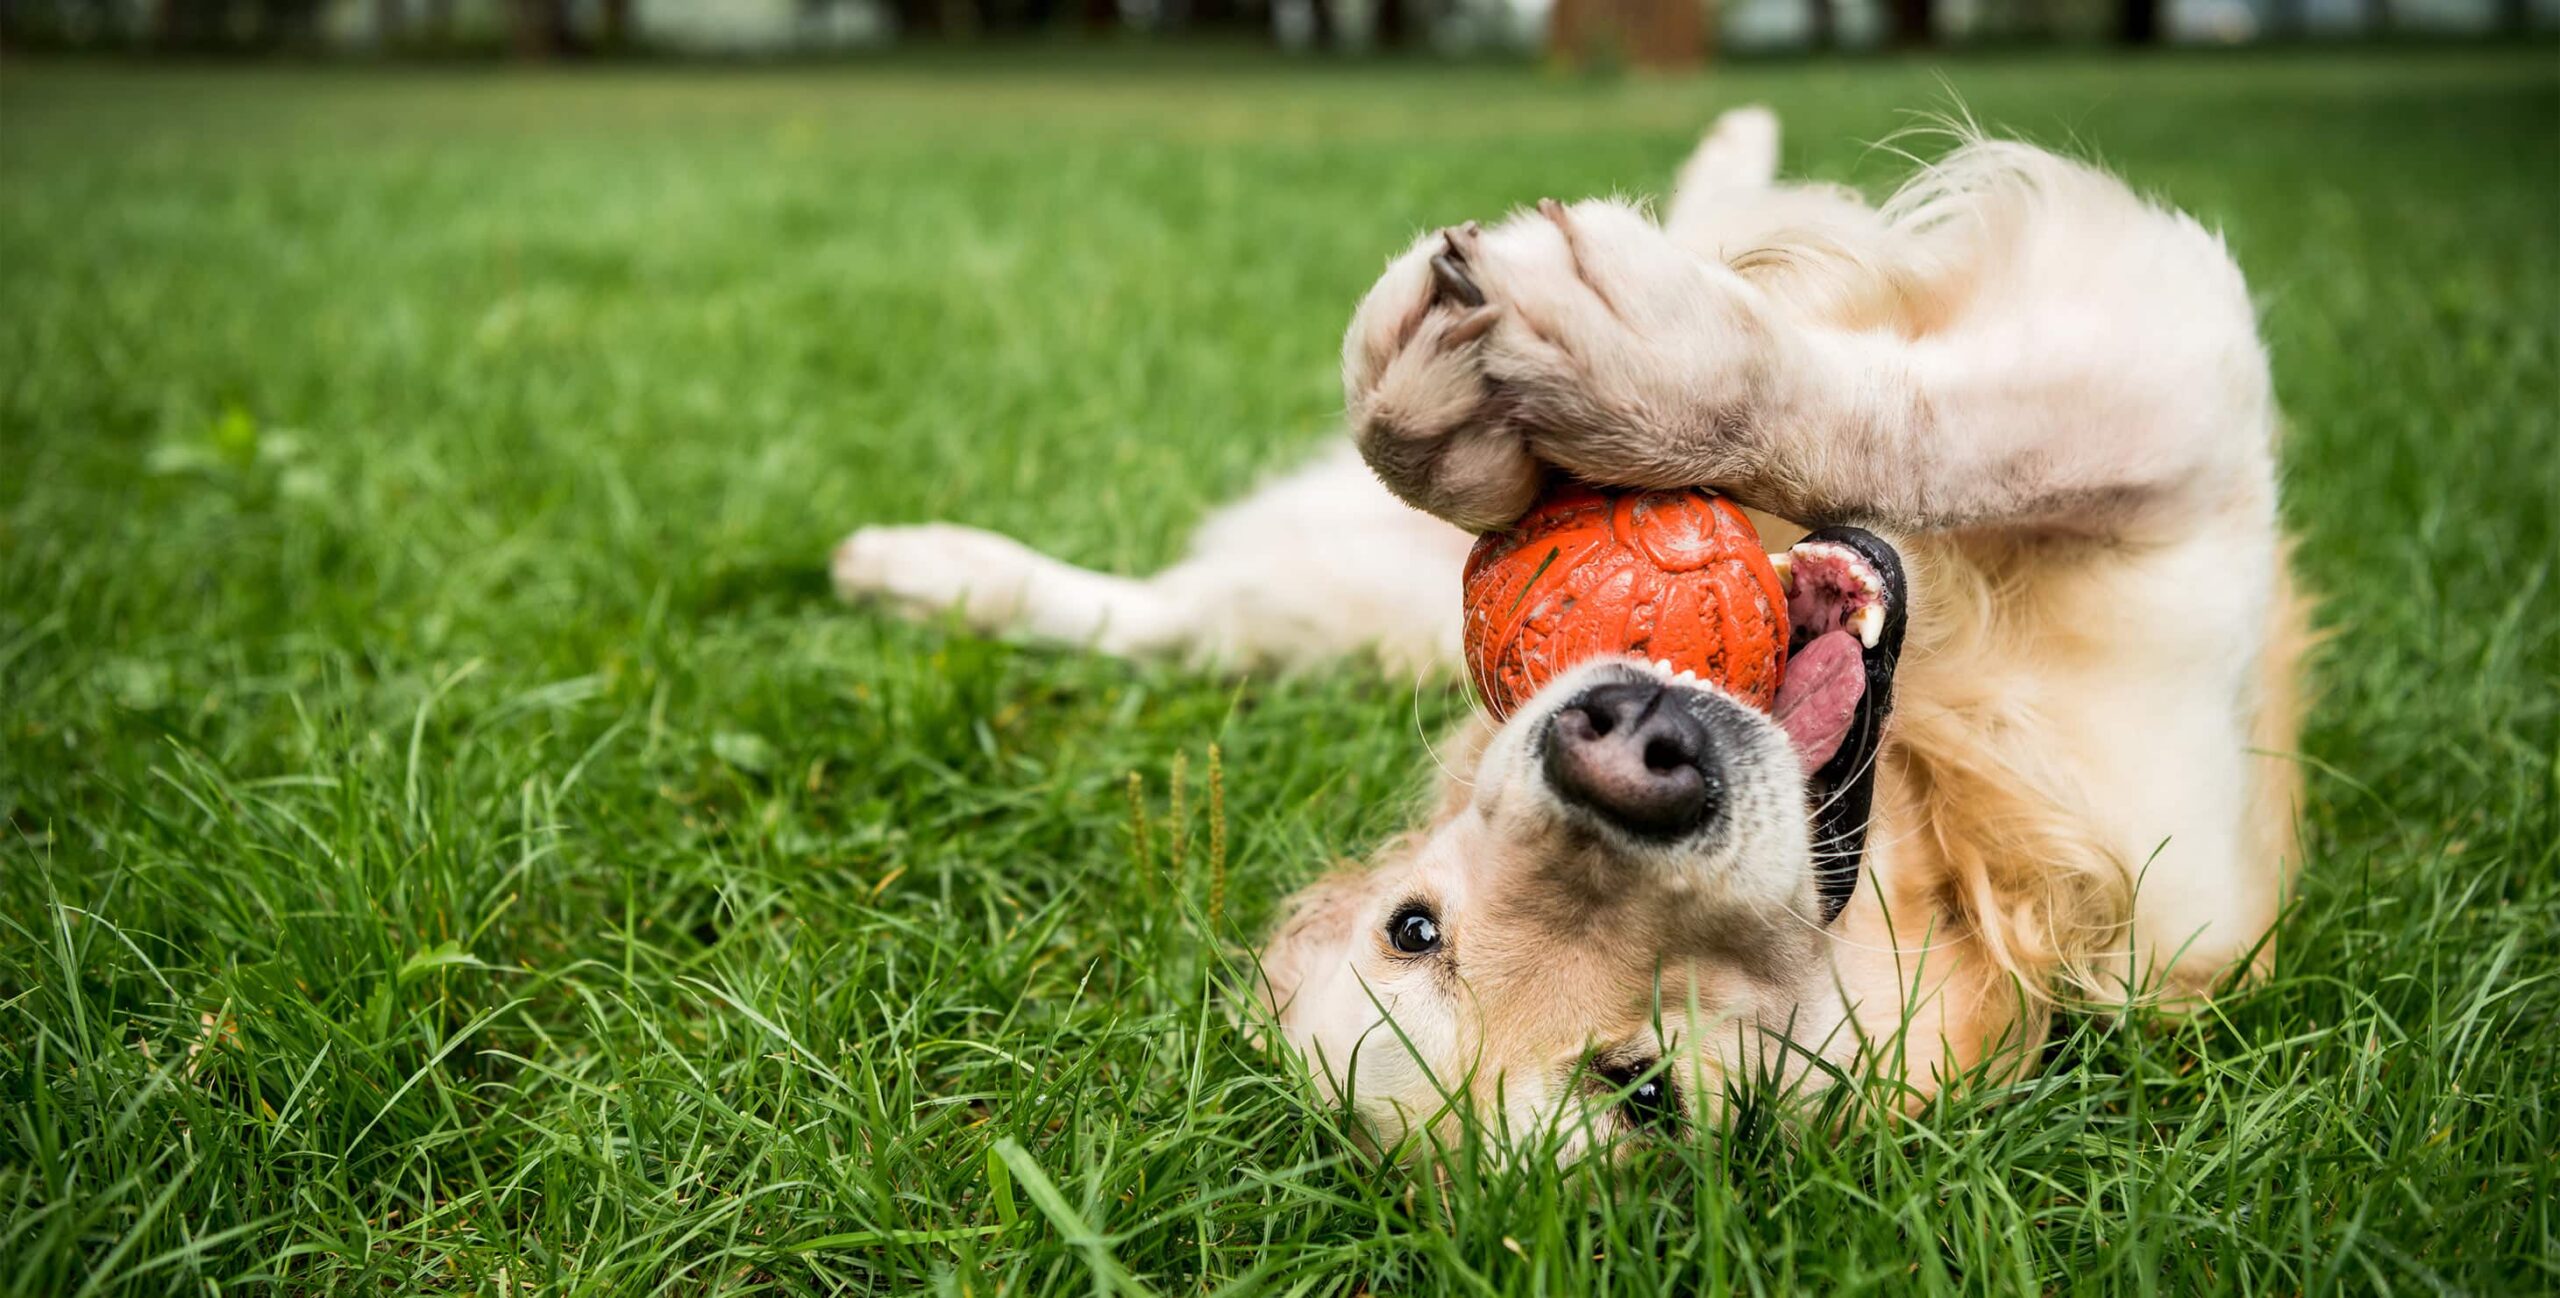 Can CBD Help Dogs With Arthritis? - CBD Oil For Dogs